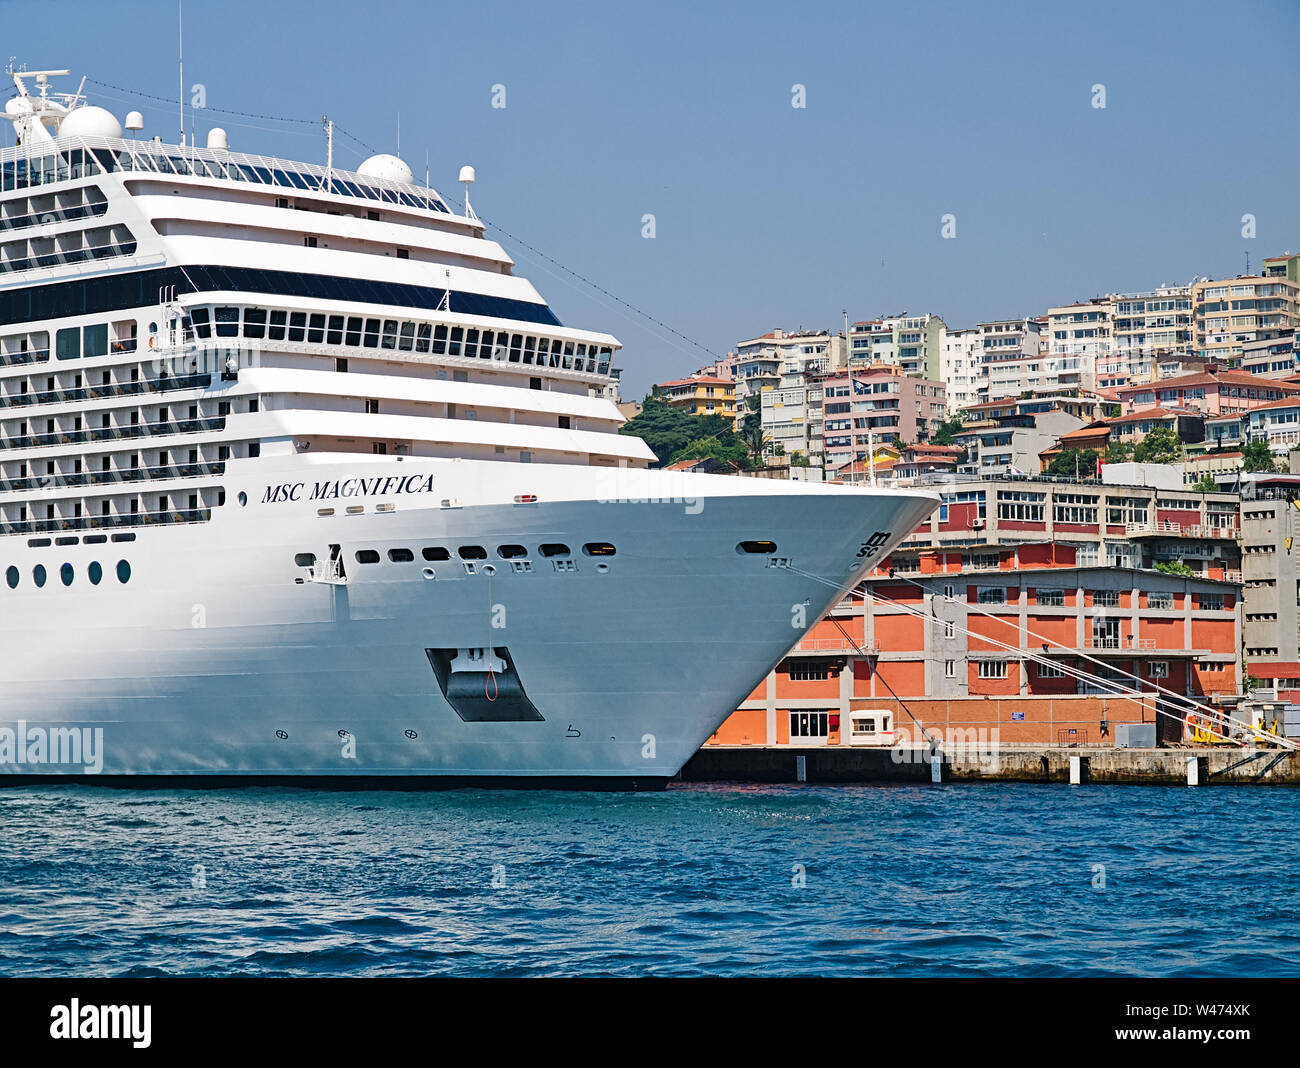 Istanbul, Turkey - 05/26/2010: Large cruise ship named 'MSC MAGNIFICA' at Istanbul coast, Turkey. Stock Photo